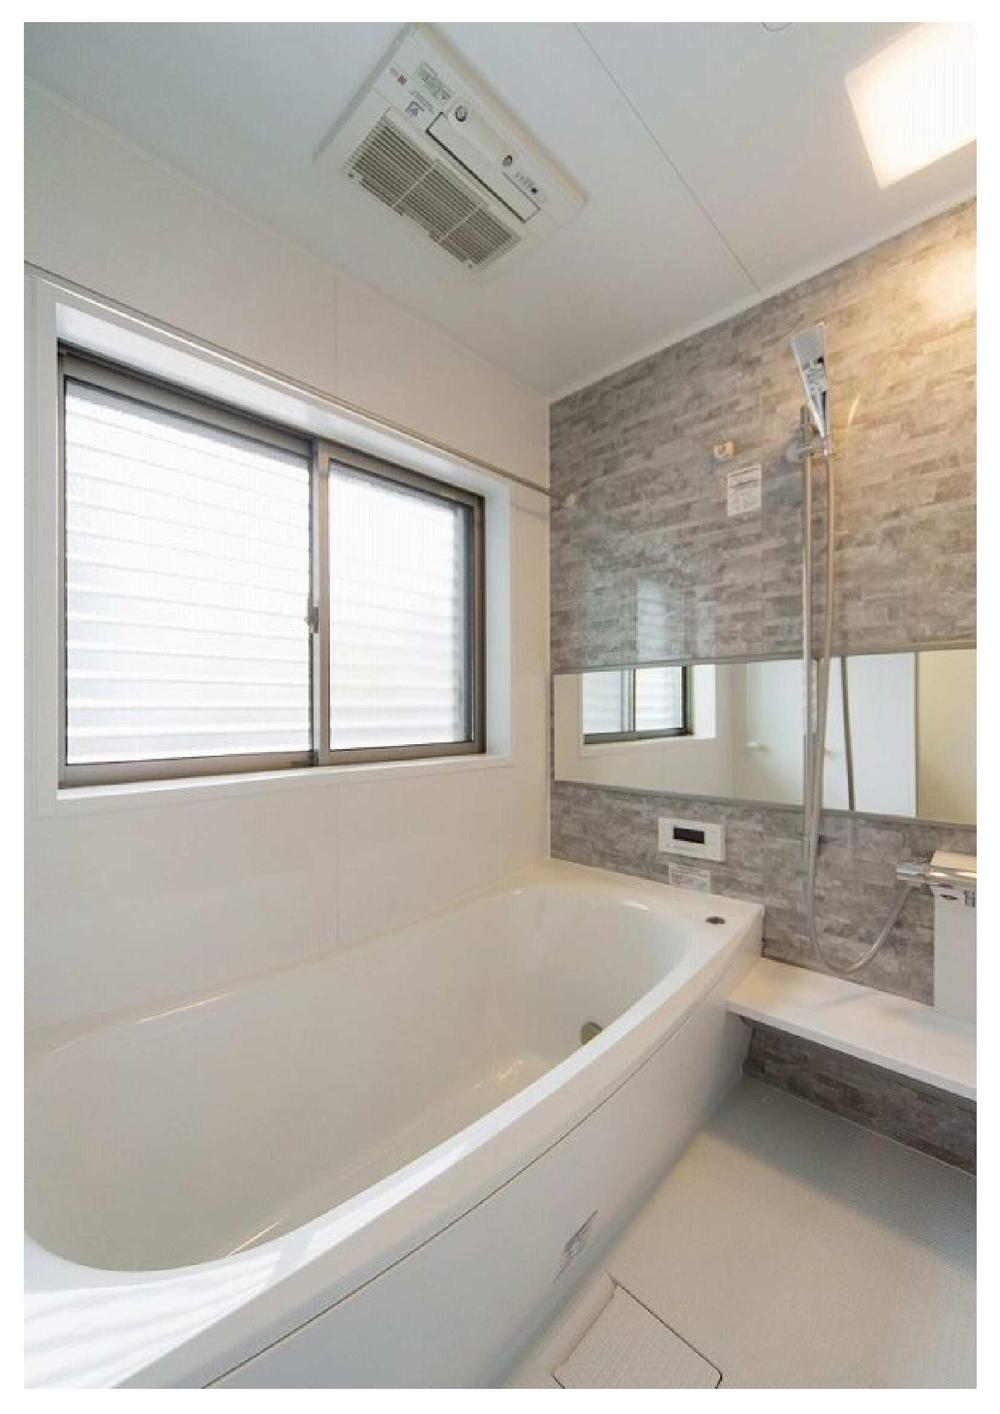 Same specifications photo (bathroom). Bathroom with mist sauna!